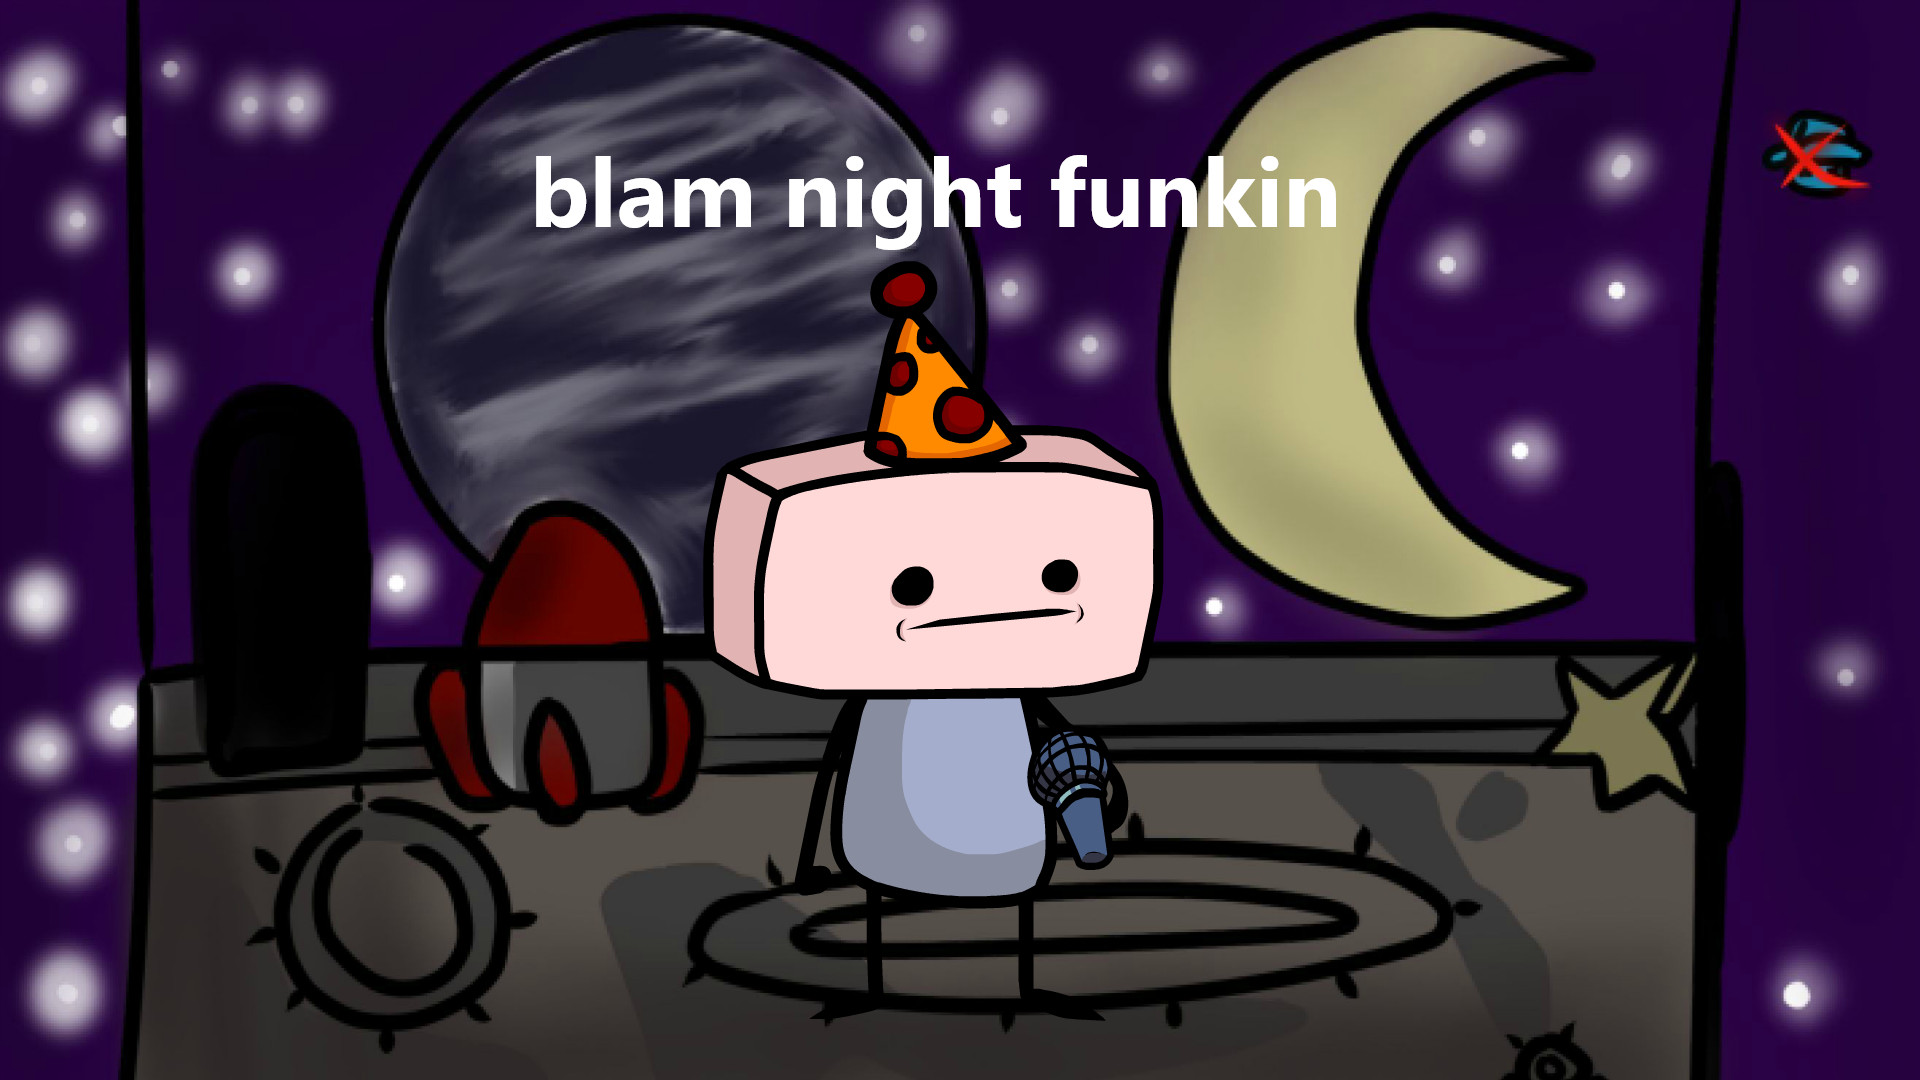 Vs. One Night At Flumpty's  Funkipedia Mods+BreezeWiki